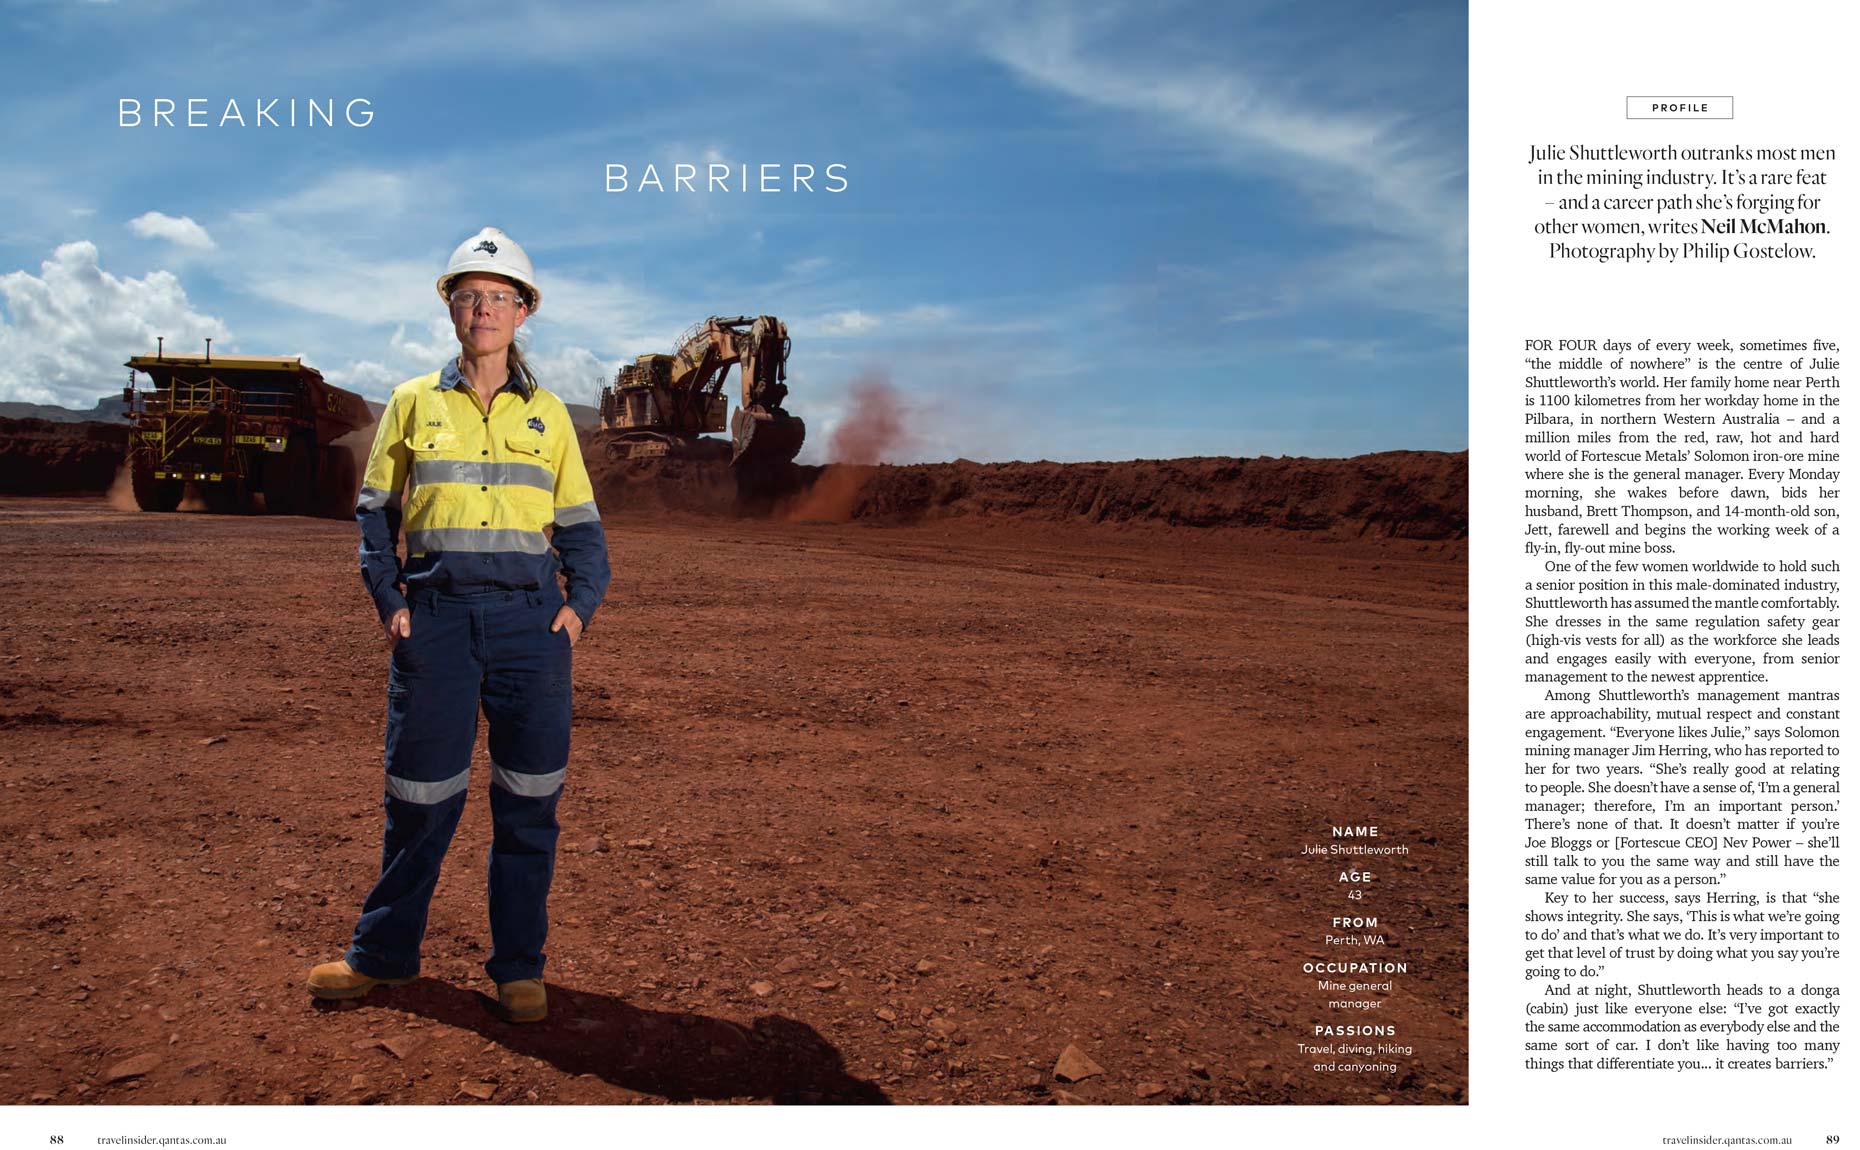 Qantas inflight magazine - Female Mine Manager at FMG